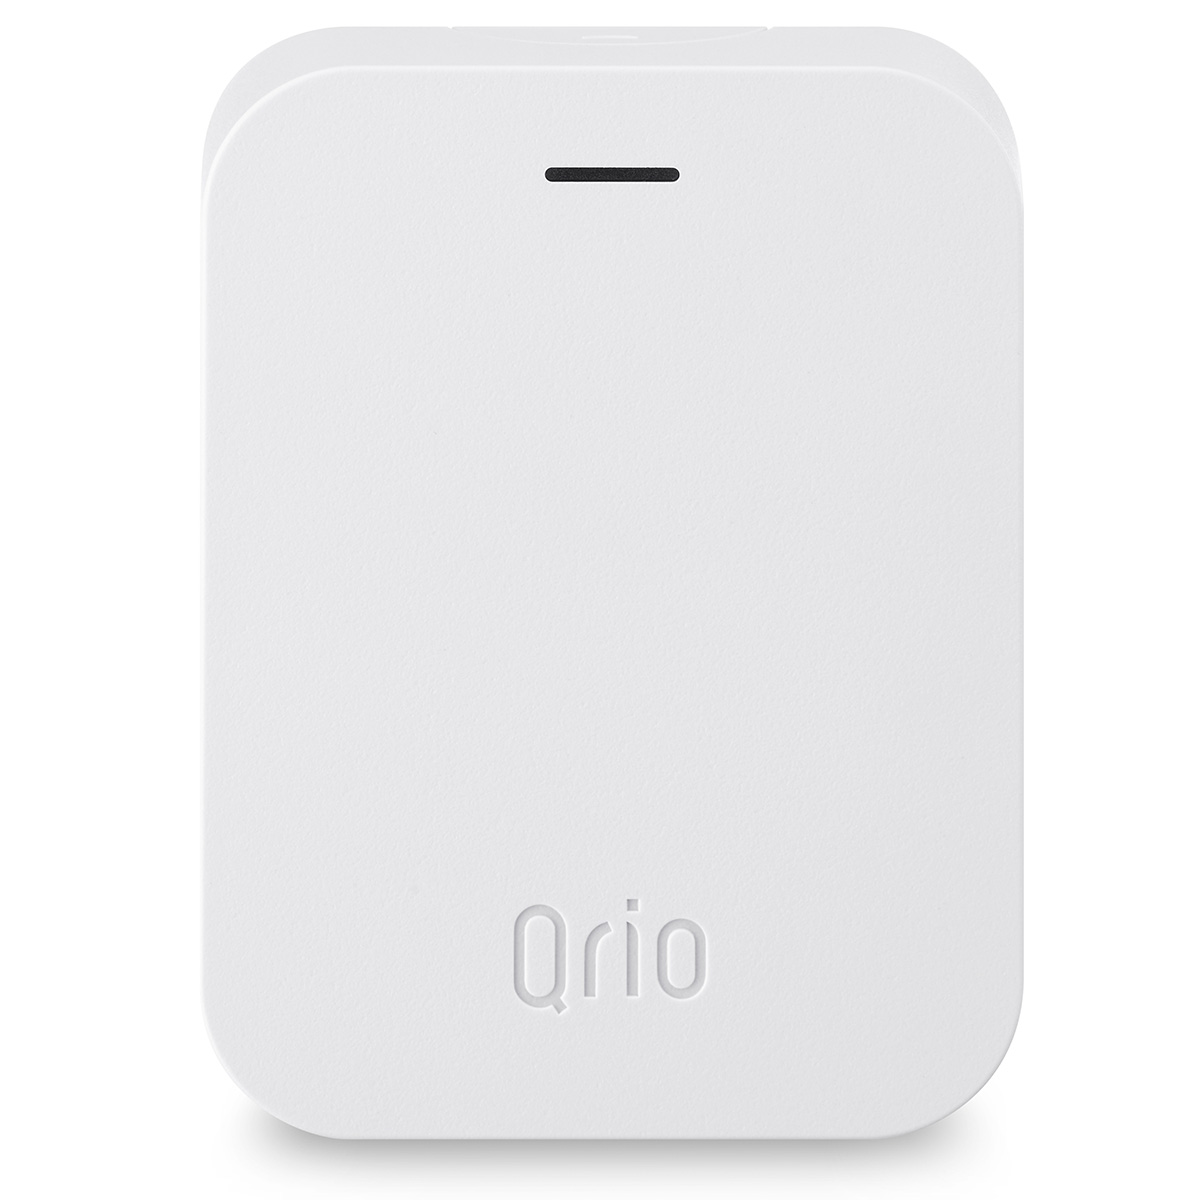 Qrio Hub キュリオハブ スマートロックを遠隔操作